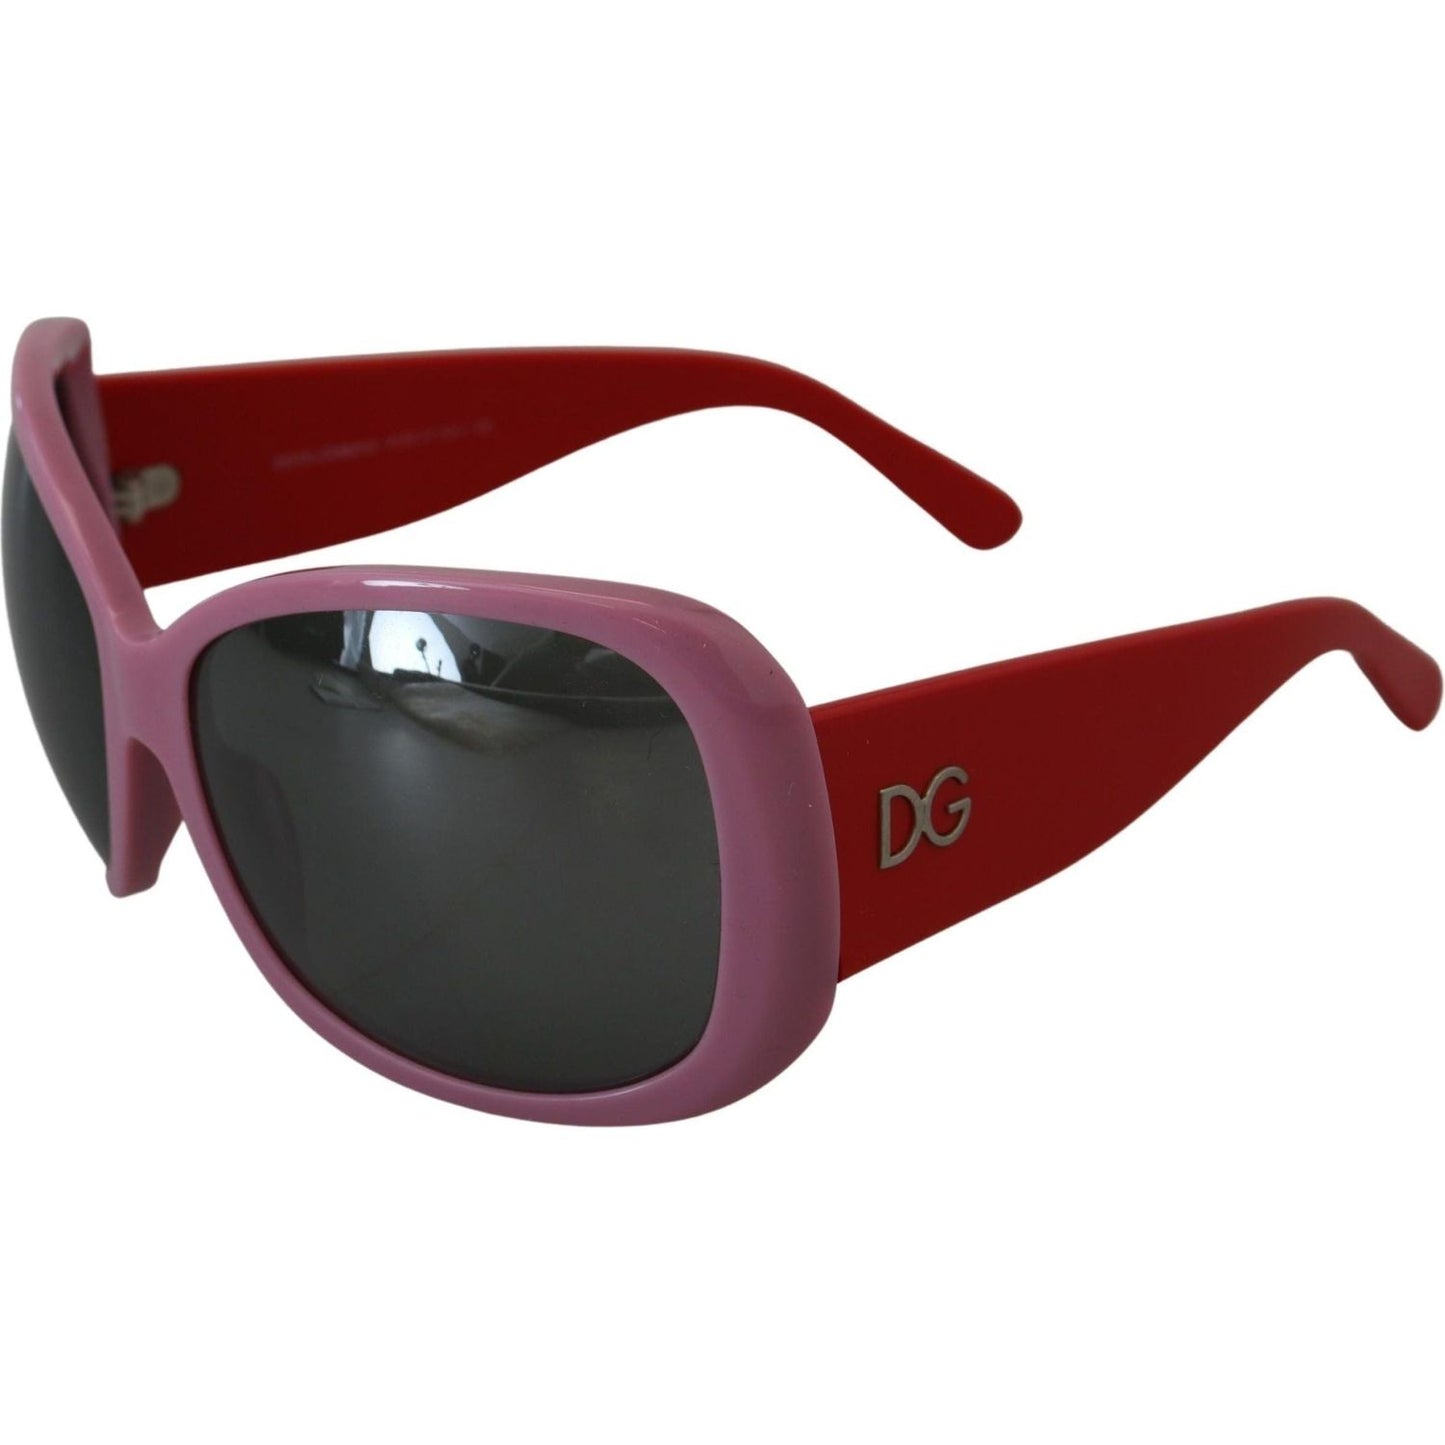 Dolce & Gabbana Chic Oversized UV-Protection Sunglasses pink-red-plastic-frame-oversized-dg4033-sunglasses IMG_4785-1-scaled-0700ac5e-c01.jpg